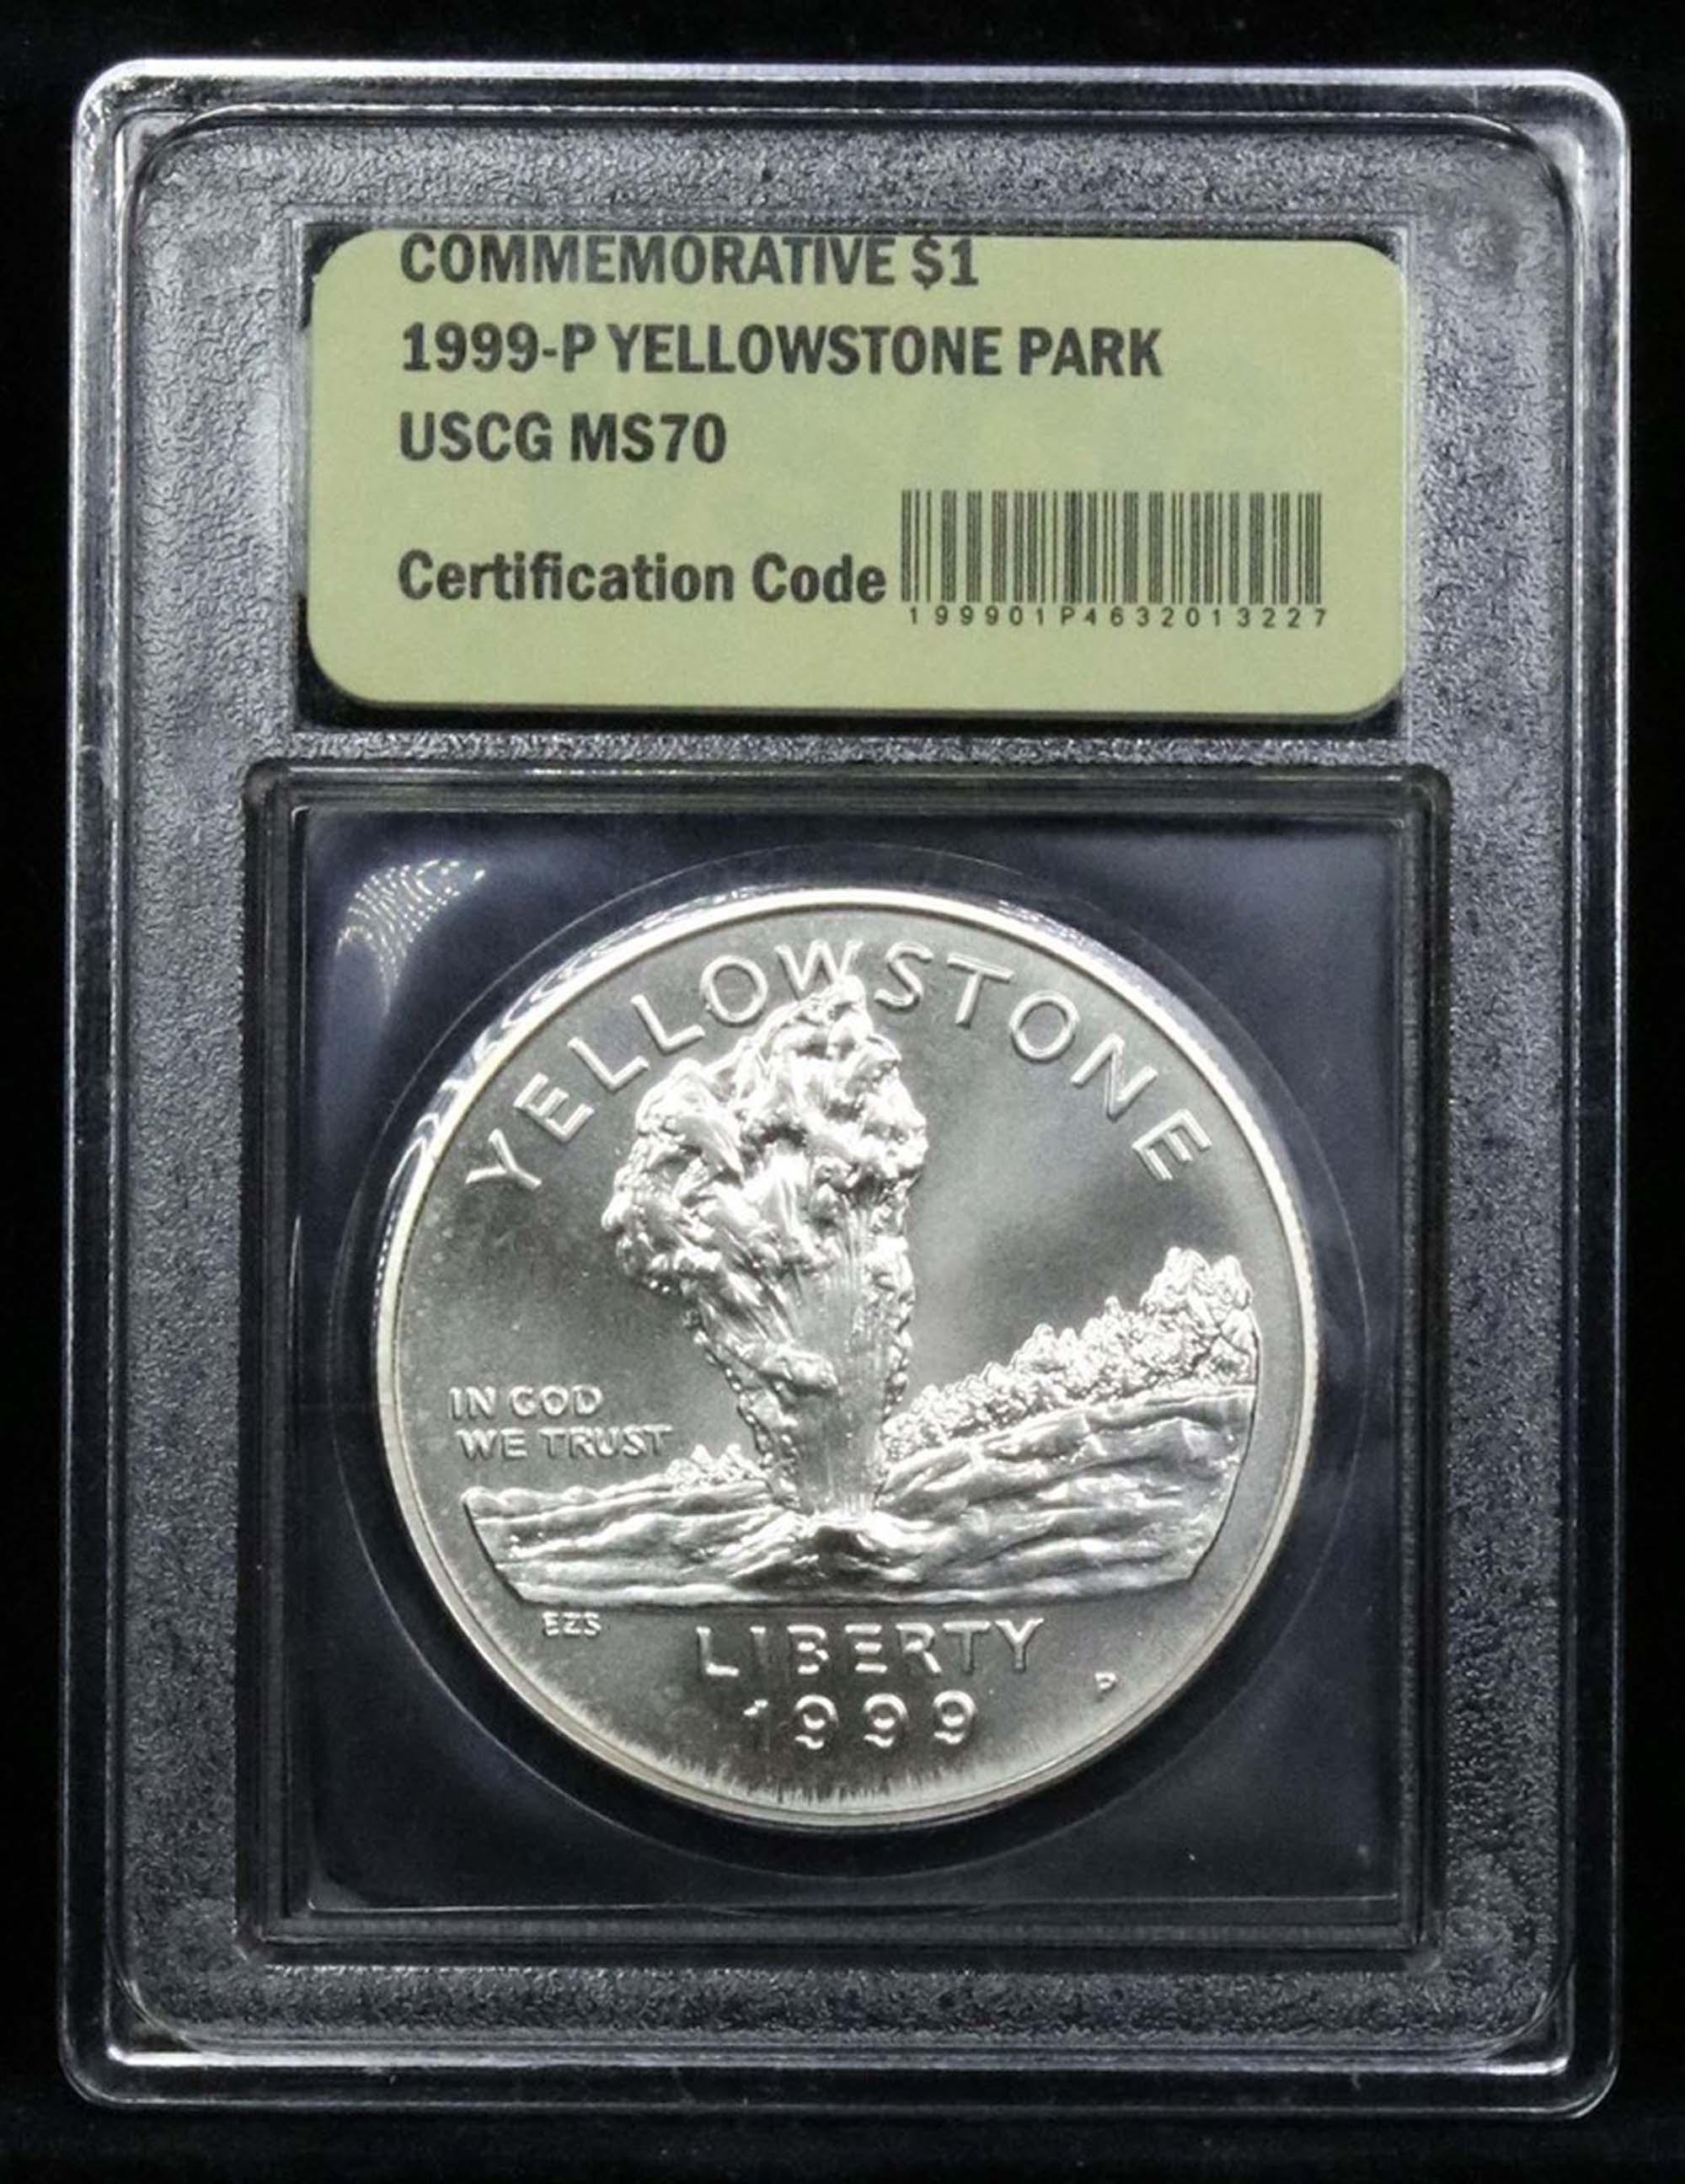 1999-p Yellowstone Modern Commem Dollar $1 Graded ms70, Perfection by USCG